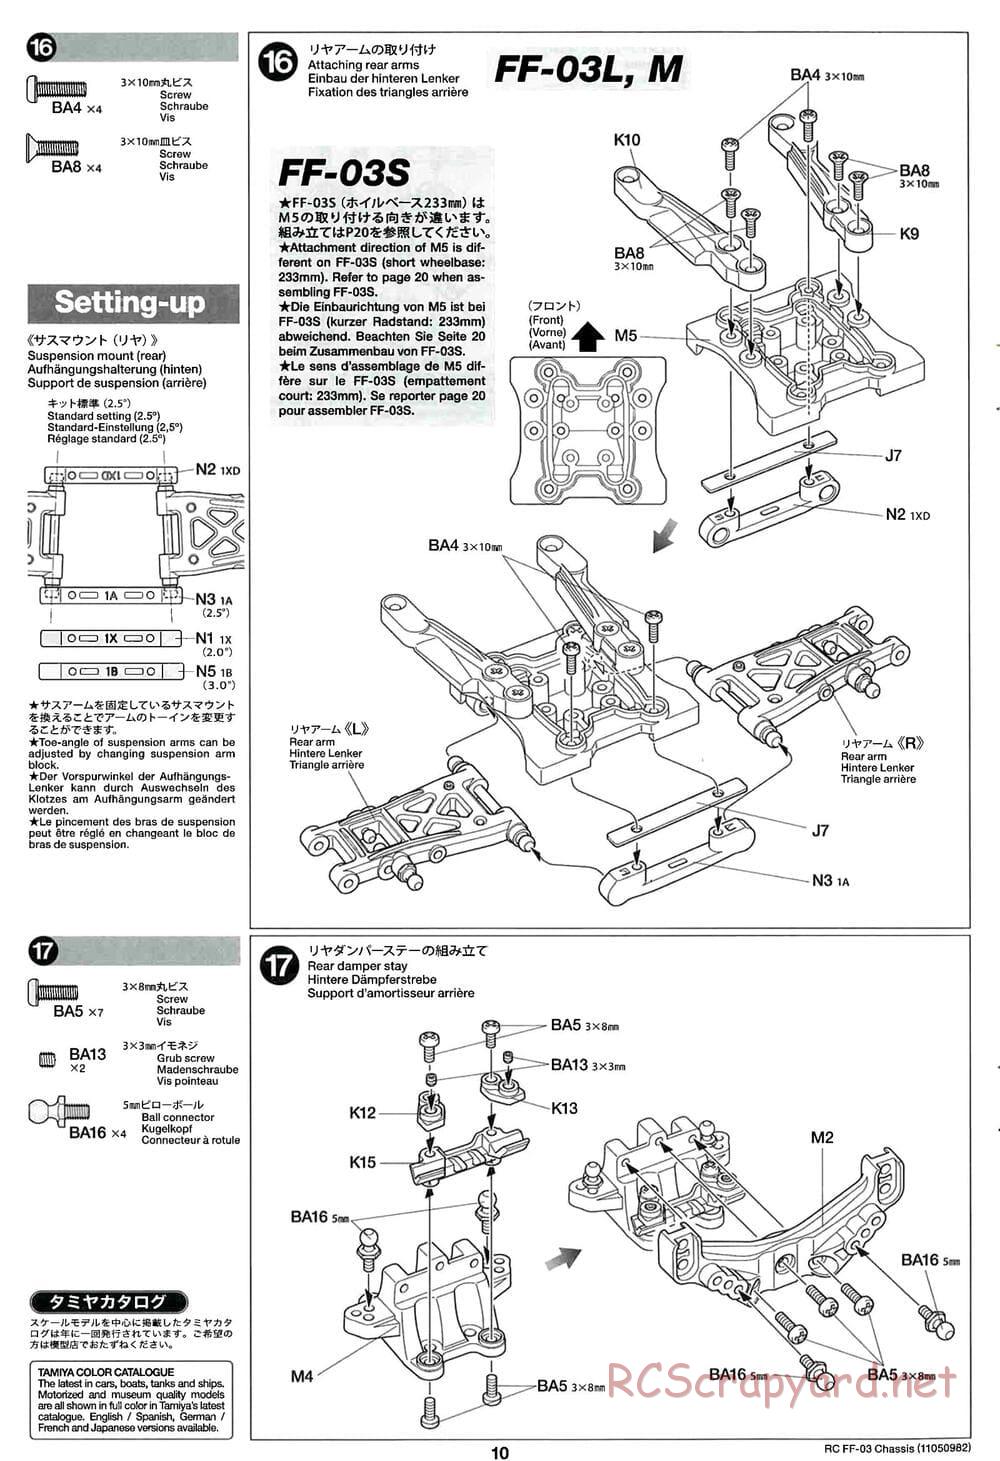 Tamiya - FF-03 Chassis - Manual - Page 10